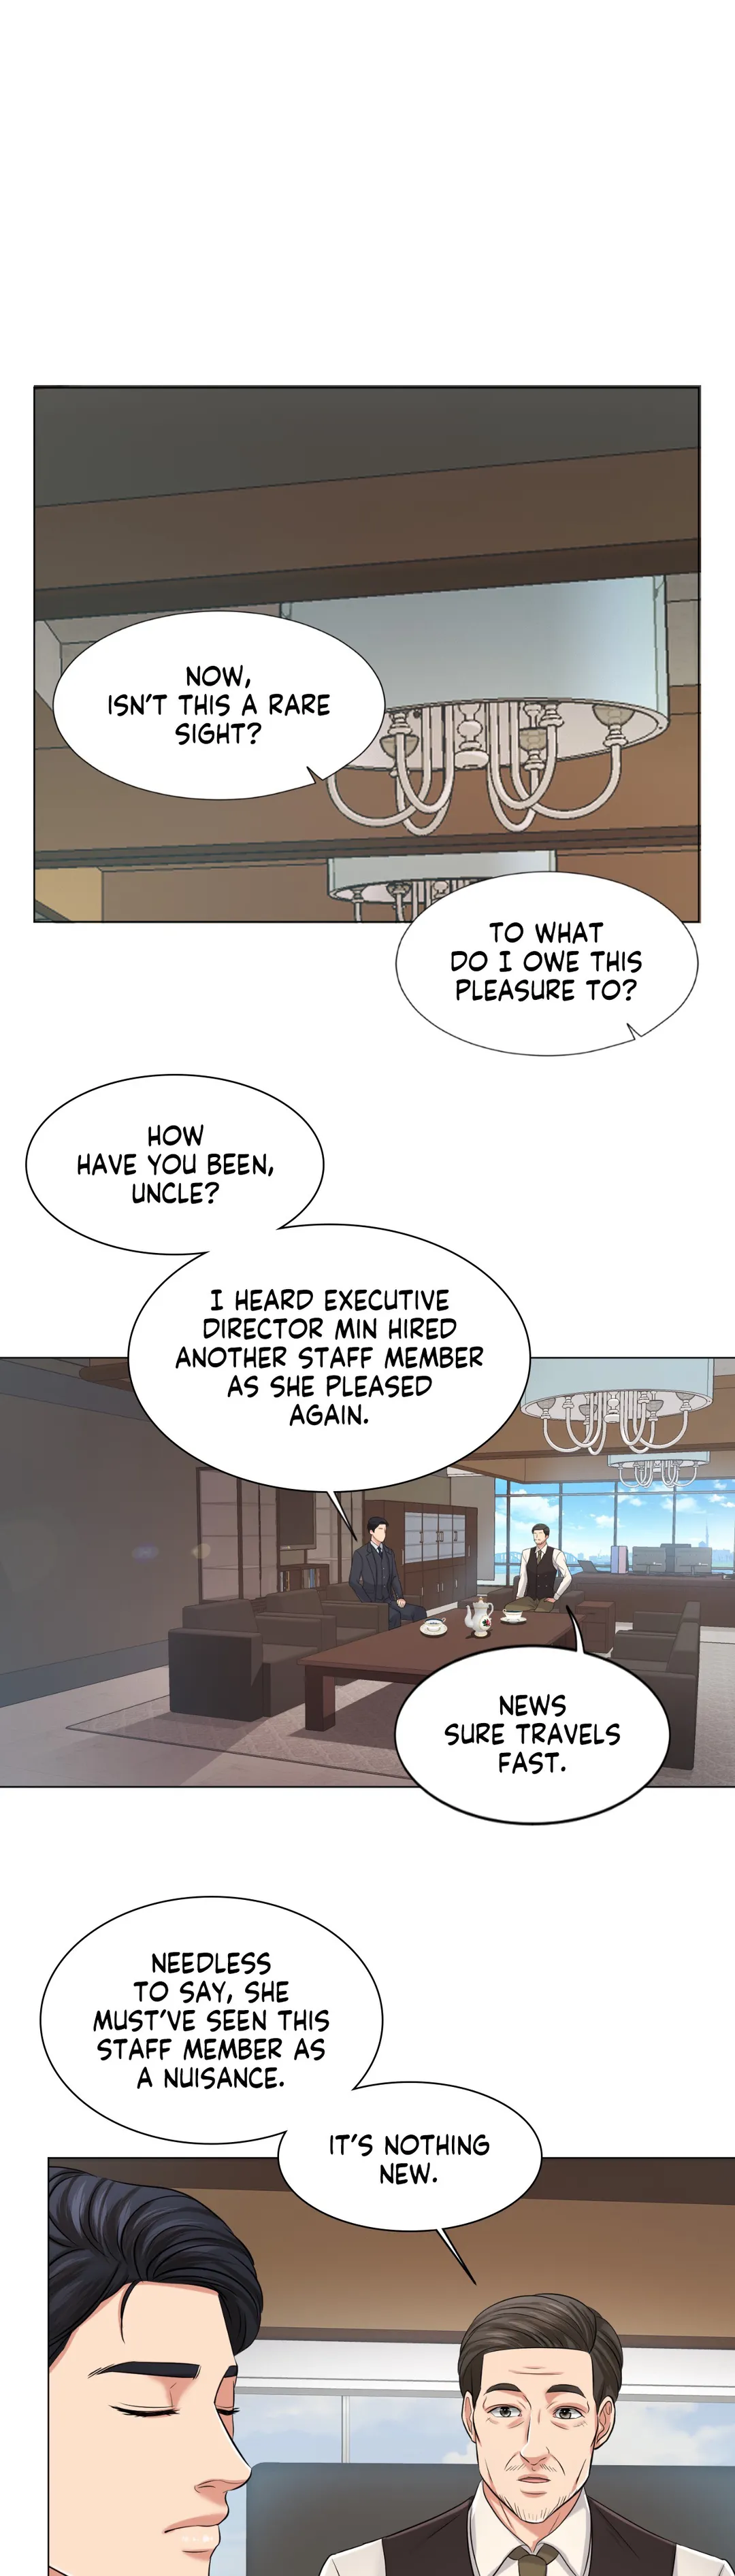 The Secret Promise - Page 3